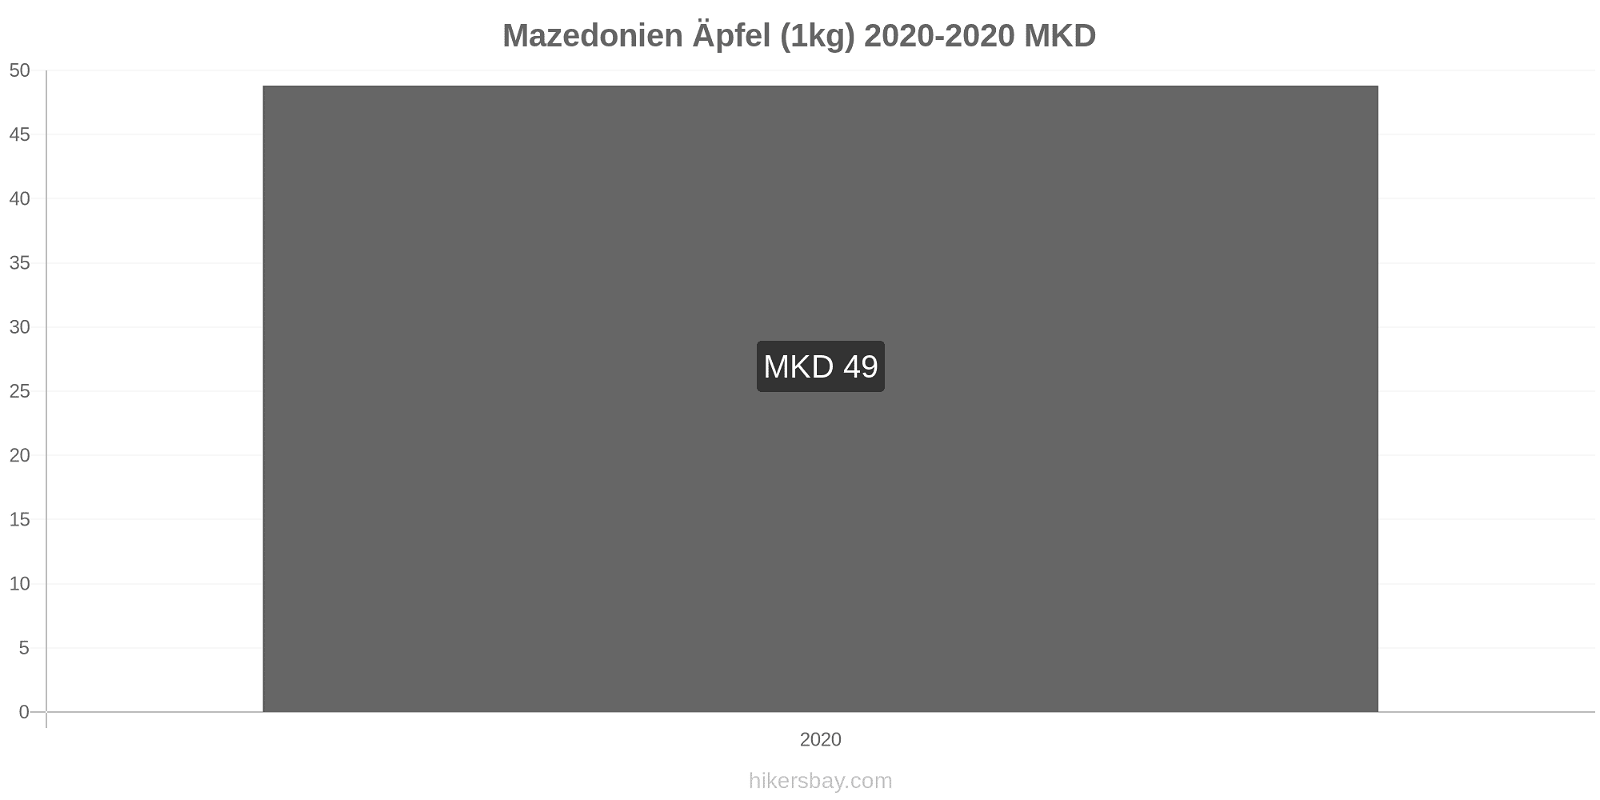 Mazedonien Preisänderungen Äpfel (1kg) hikersbay.com